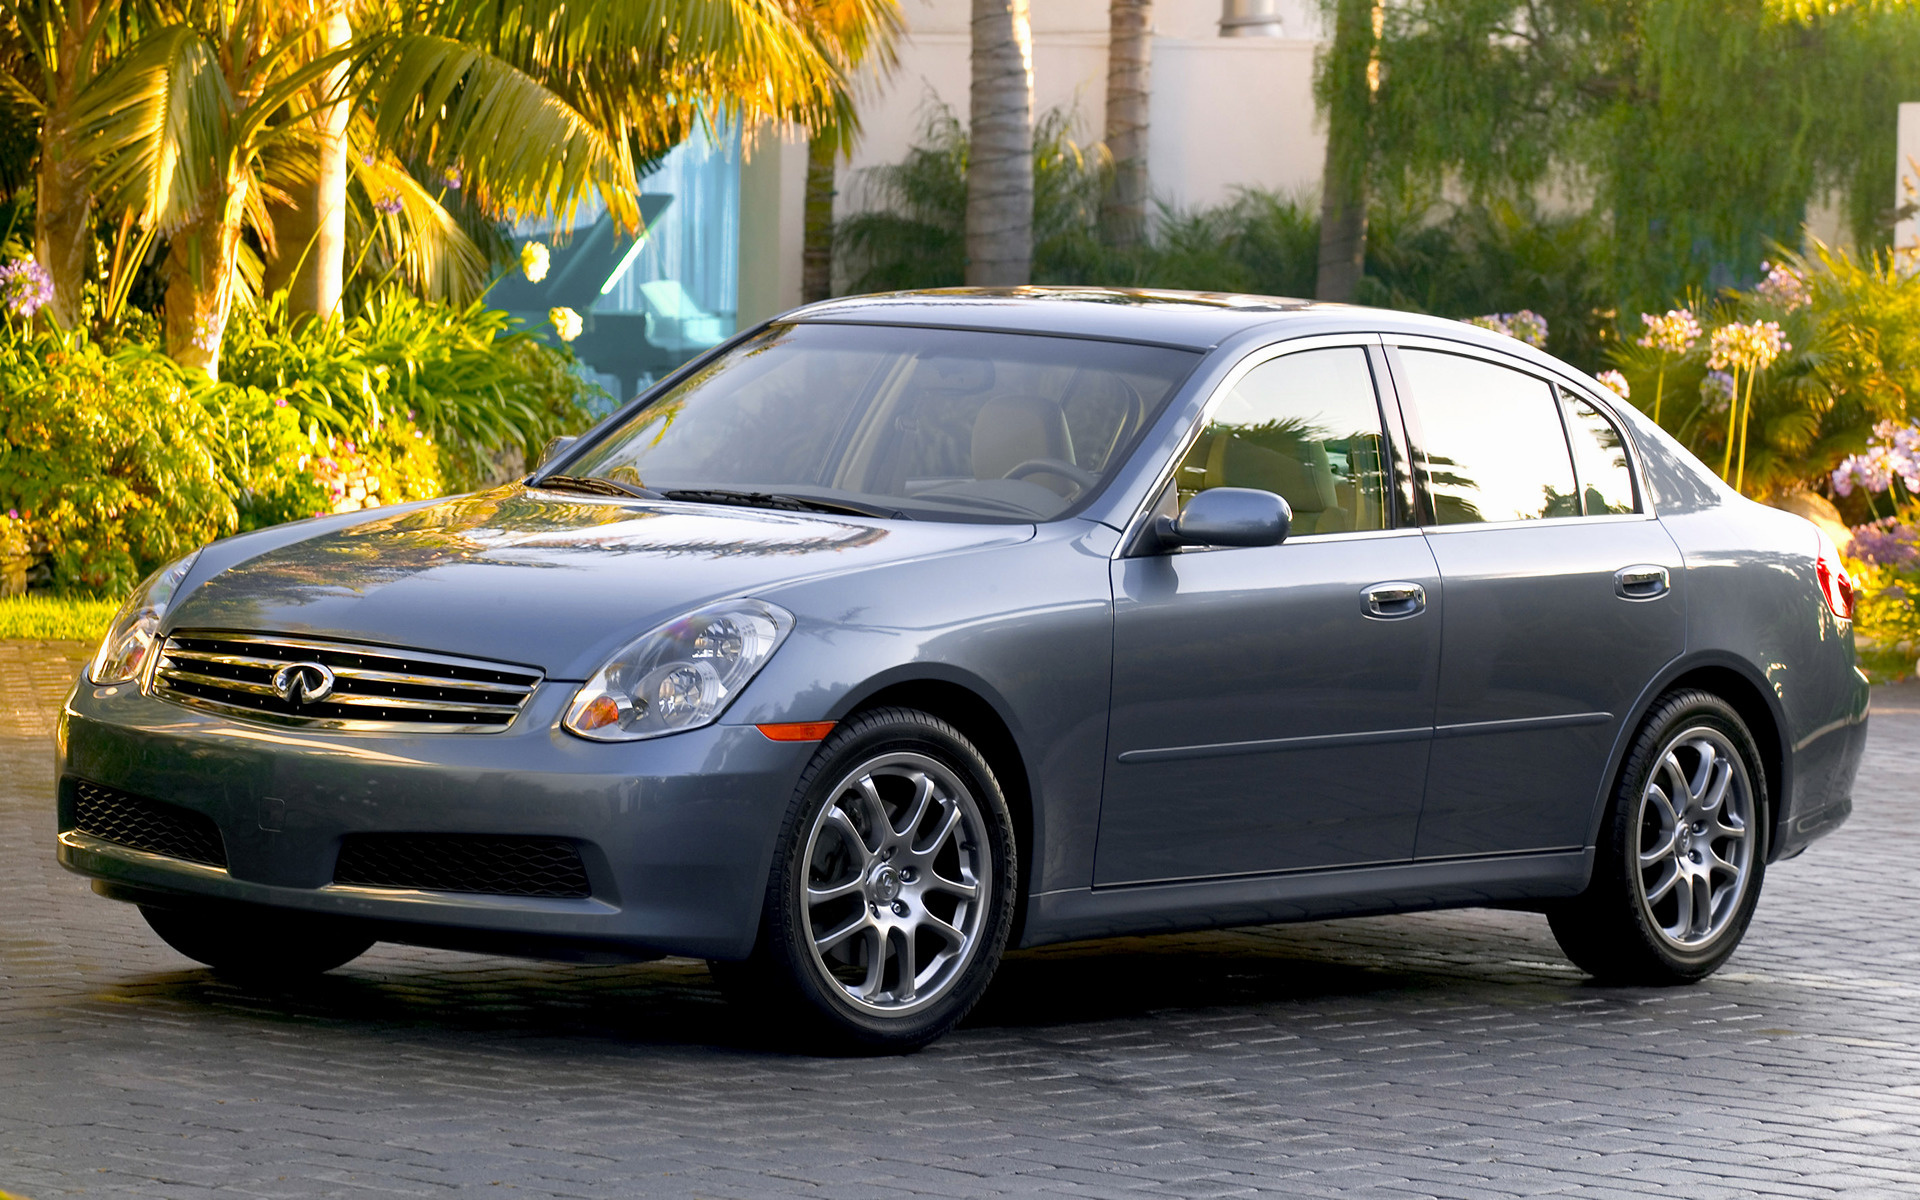 Infiniti G35, 2005 model, High-resolution images, Luxury car, 1920x1200 HD Desktop